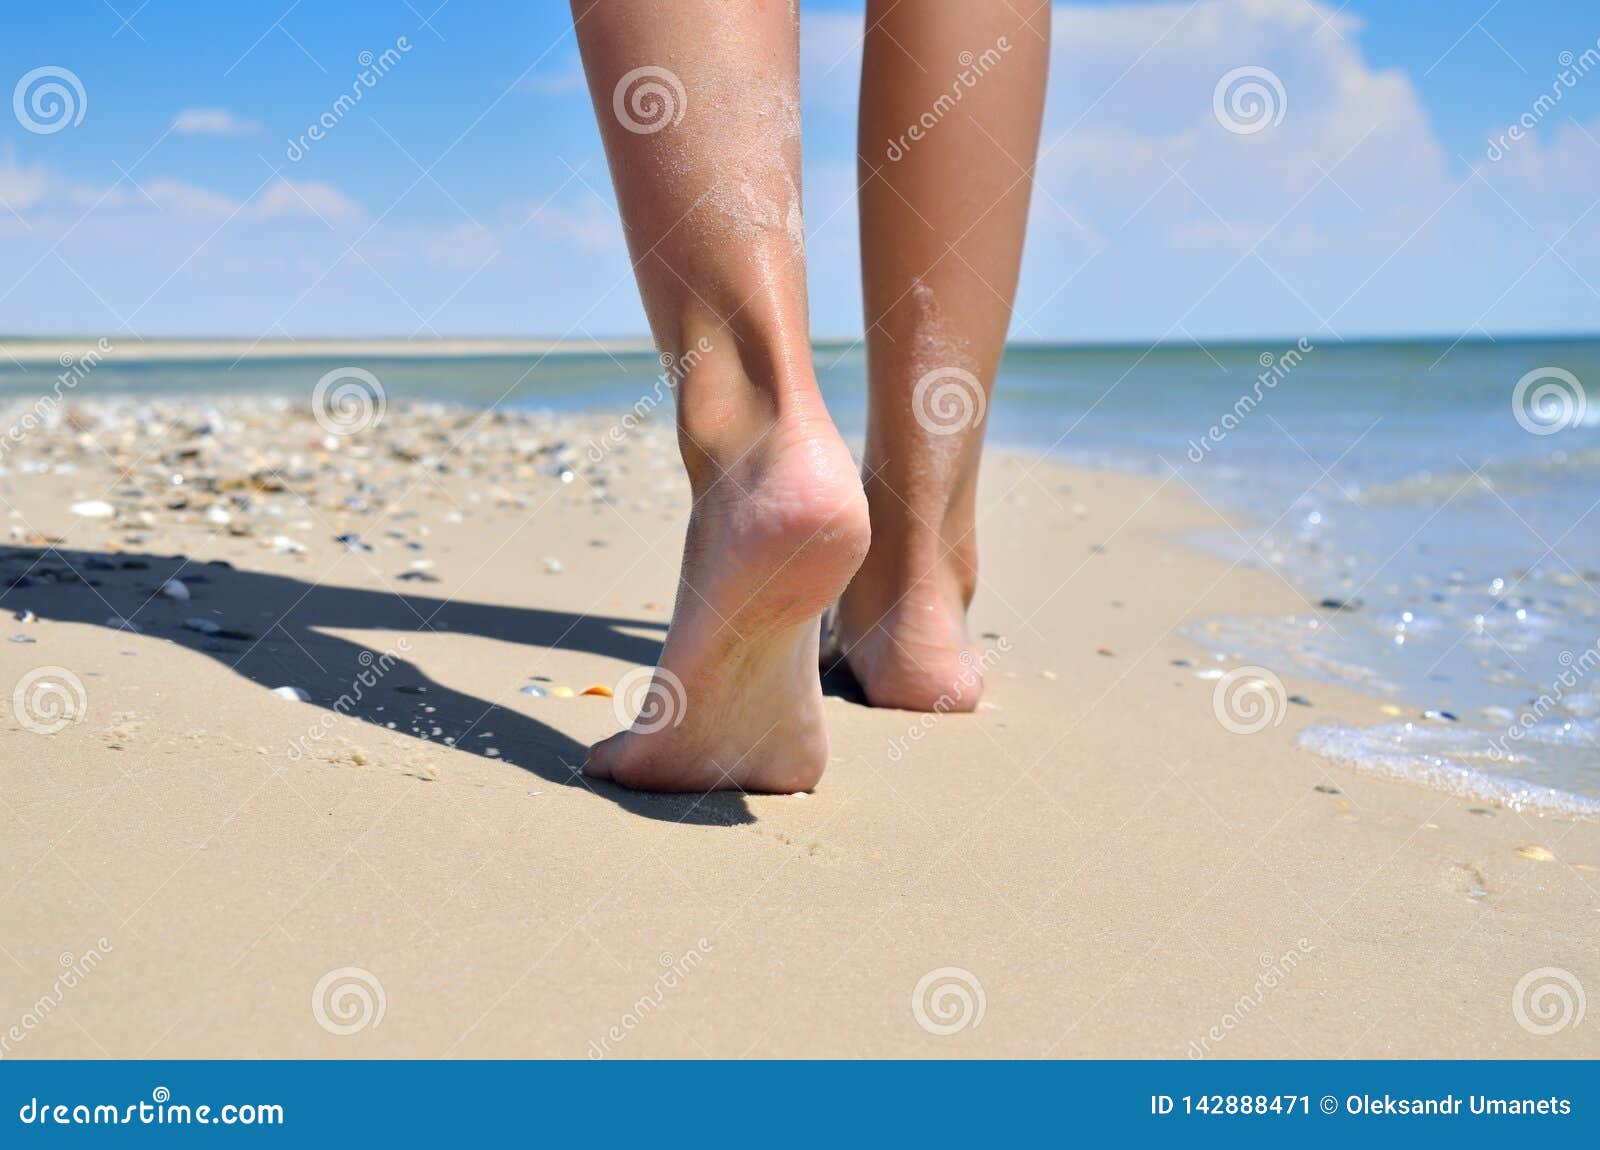 Girl Walking Barefoot On The Sand Of The Sea Beach Stock Image Image Of Bracelet Legs 142888471